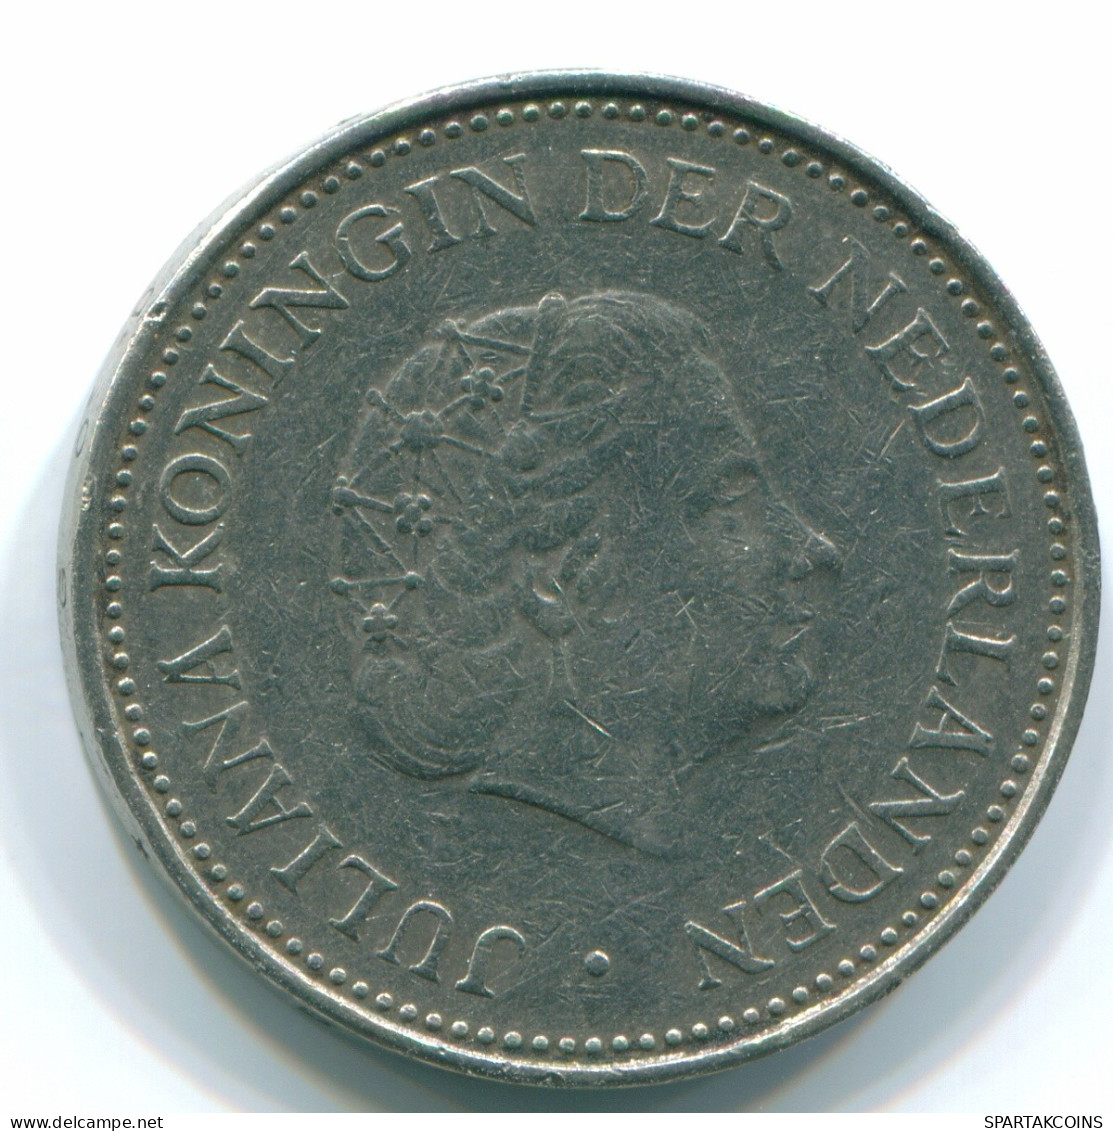 1 GULDEN 1971 NETHERLANDS ANTILLES Nickel Colonial Coin #S11959.U.A - Nederlandse Antillen